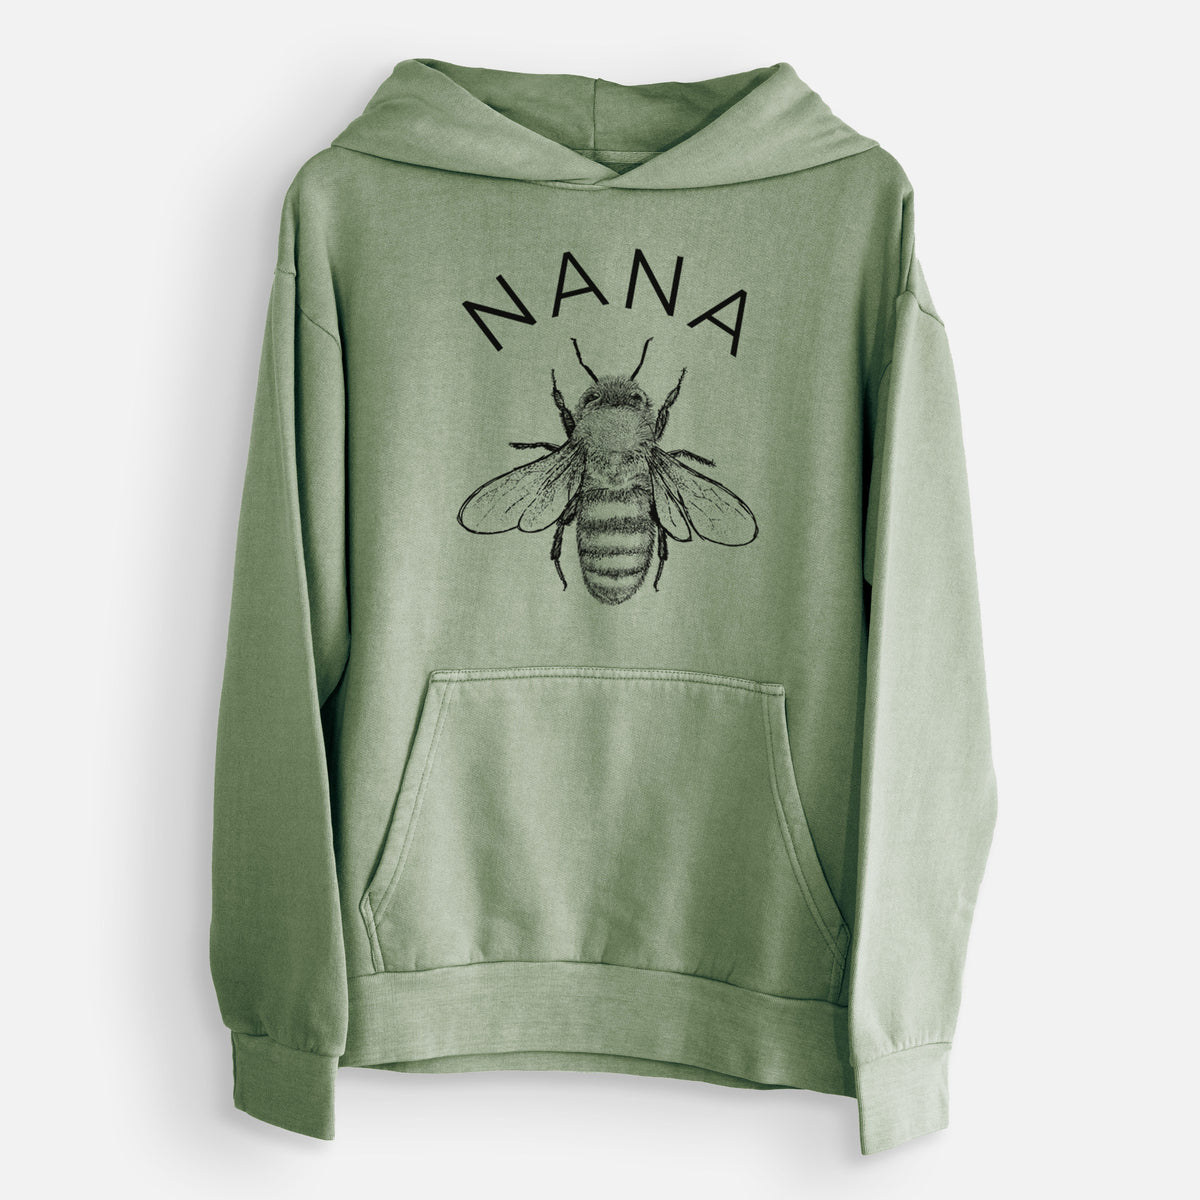 Nana Bee  - Urban Heavyweight Hoodie